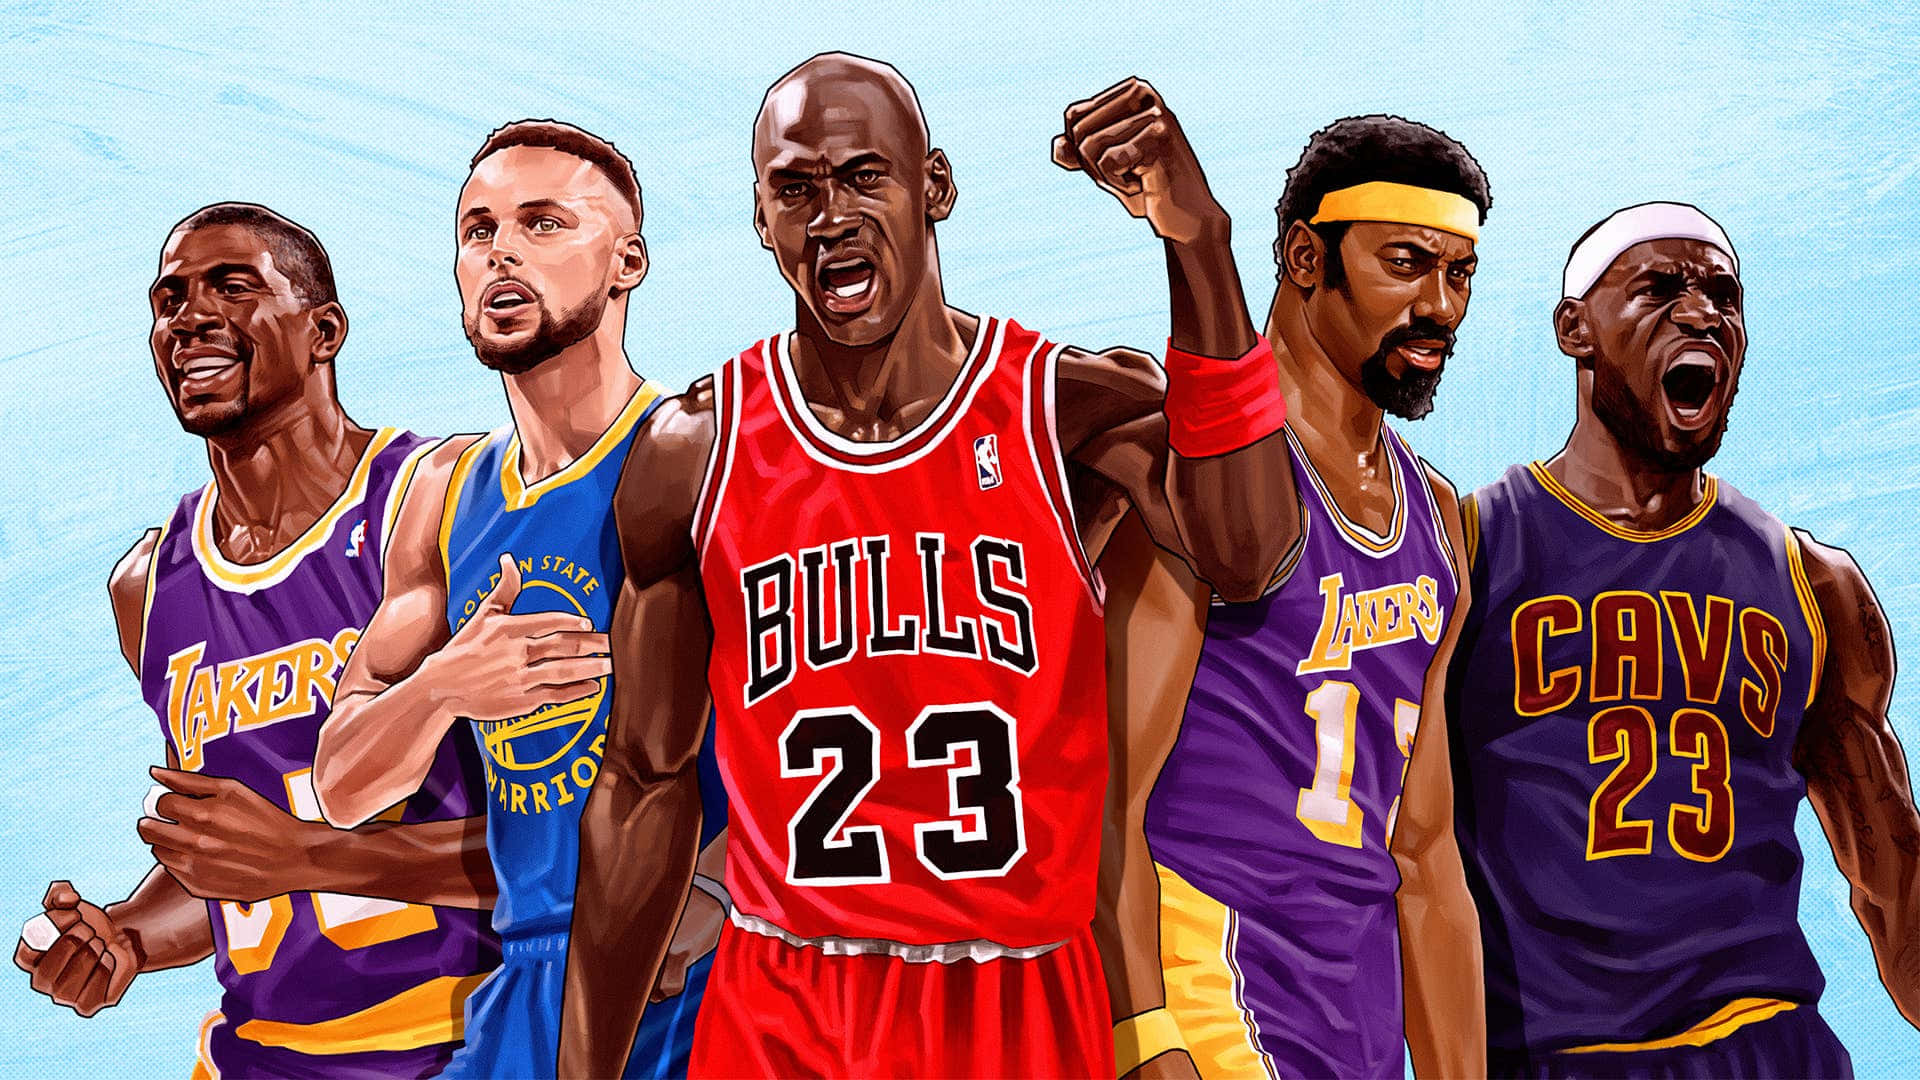 Nba Legends - The Glory Of Basketball Wallpaper